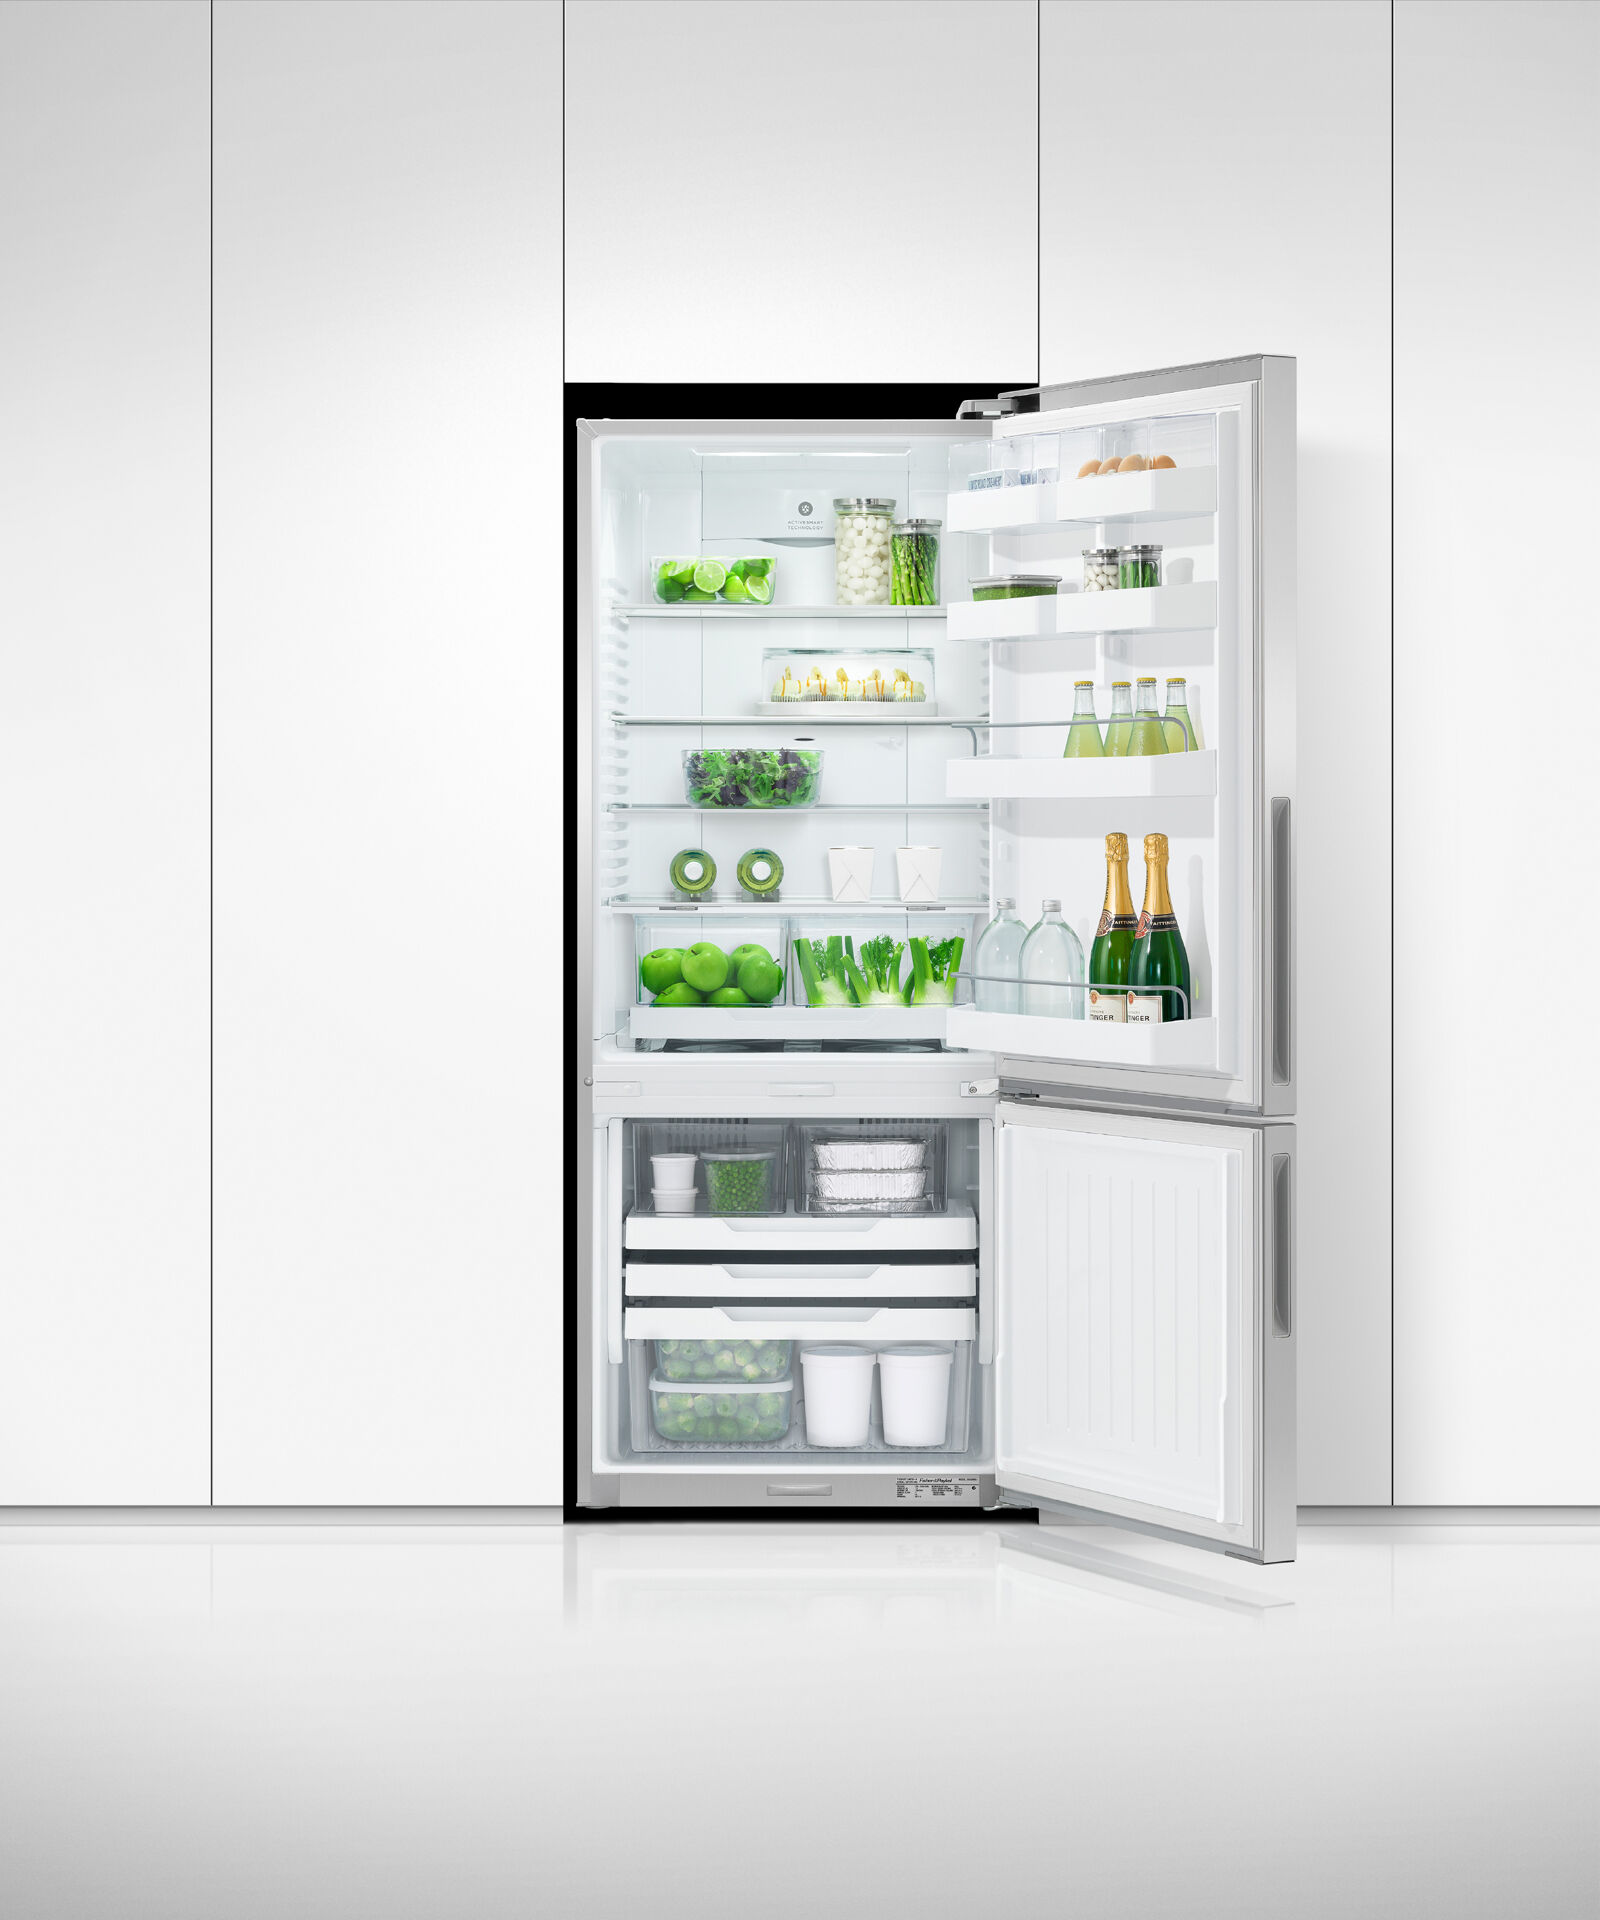 獨立式雪櫃冷凍櫃, 68cm, gallery image 4.0